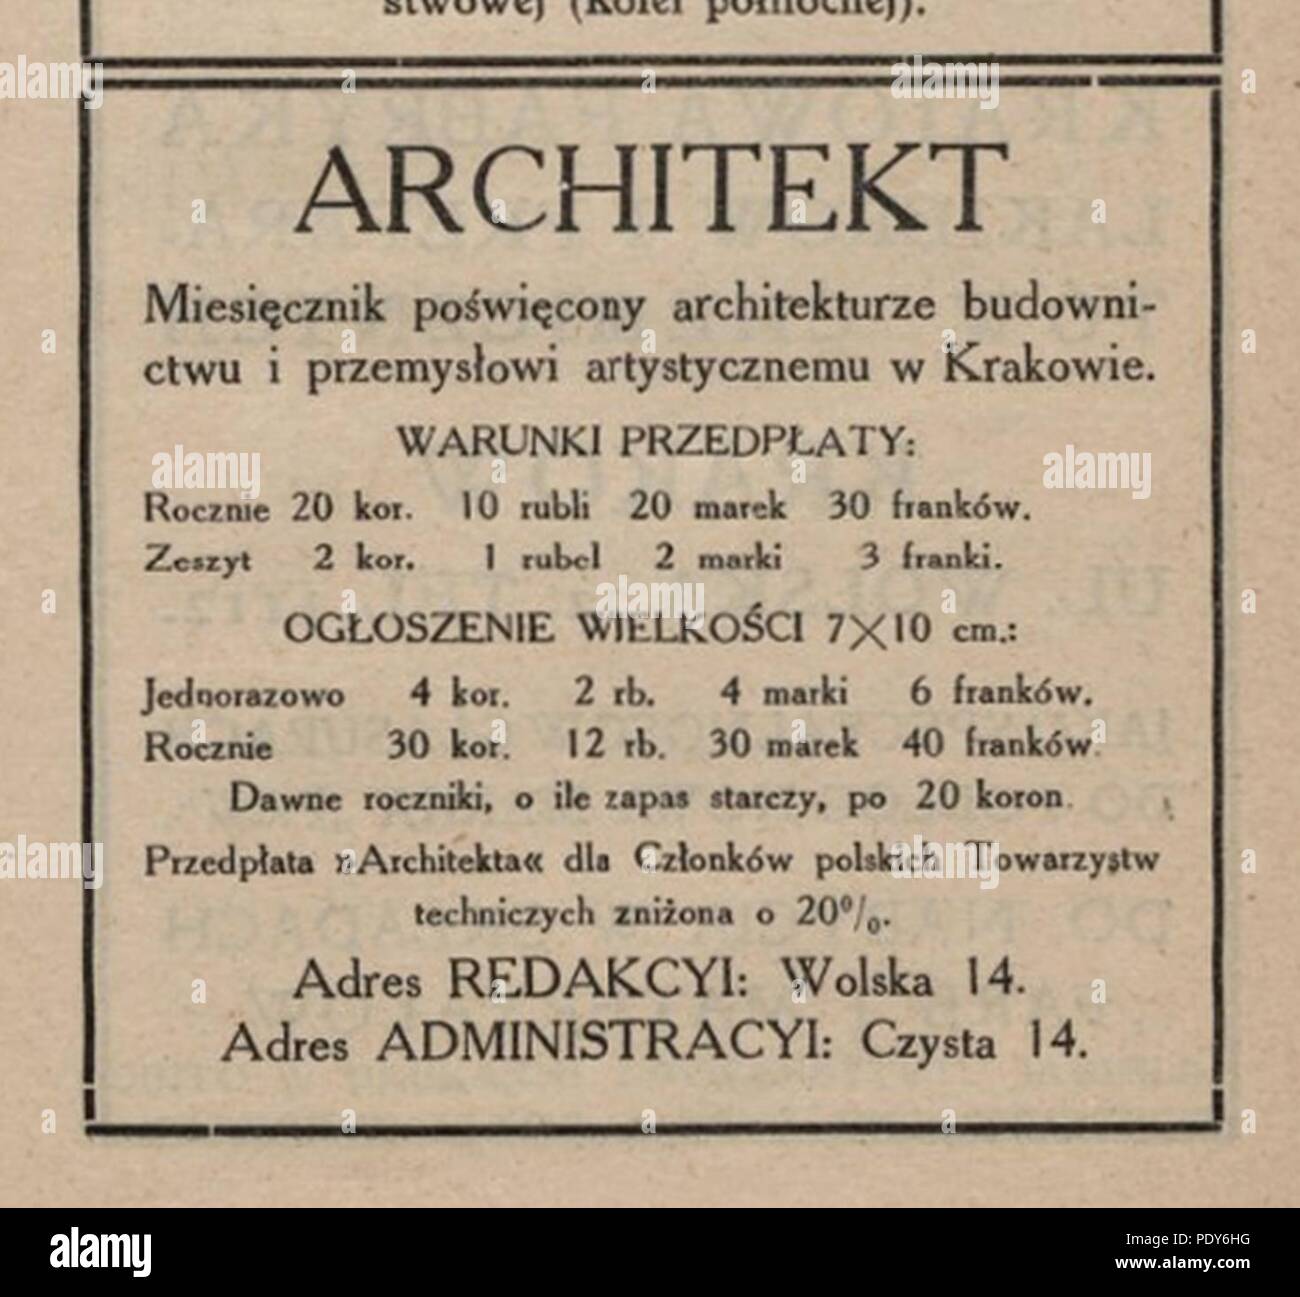 Architekt advertisement (Katalog wystawy architektury i wnętrz... 1912 s. 9). Stock Photo